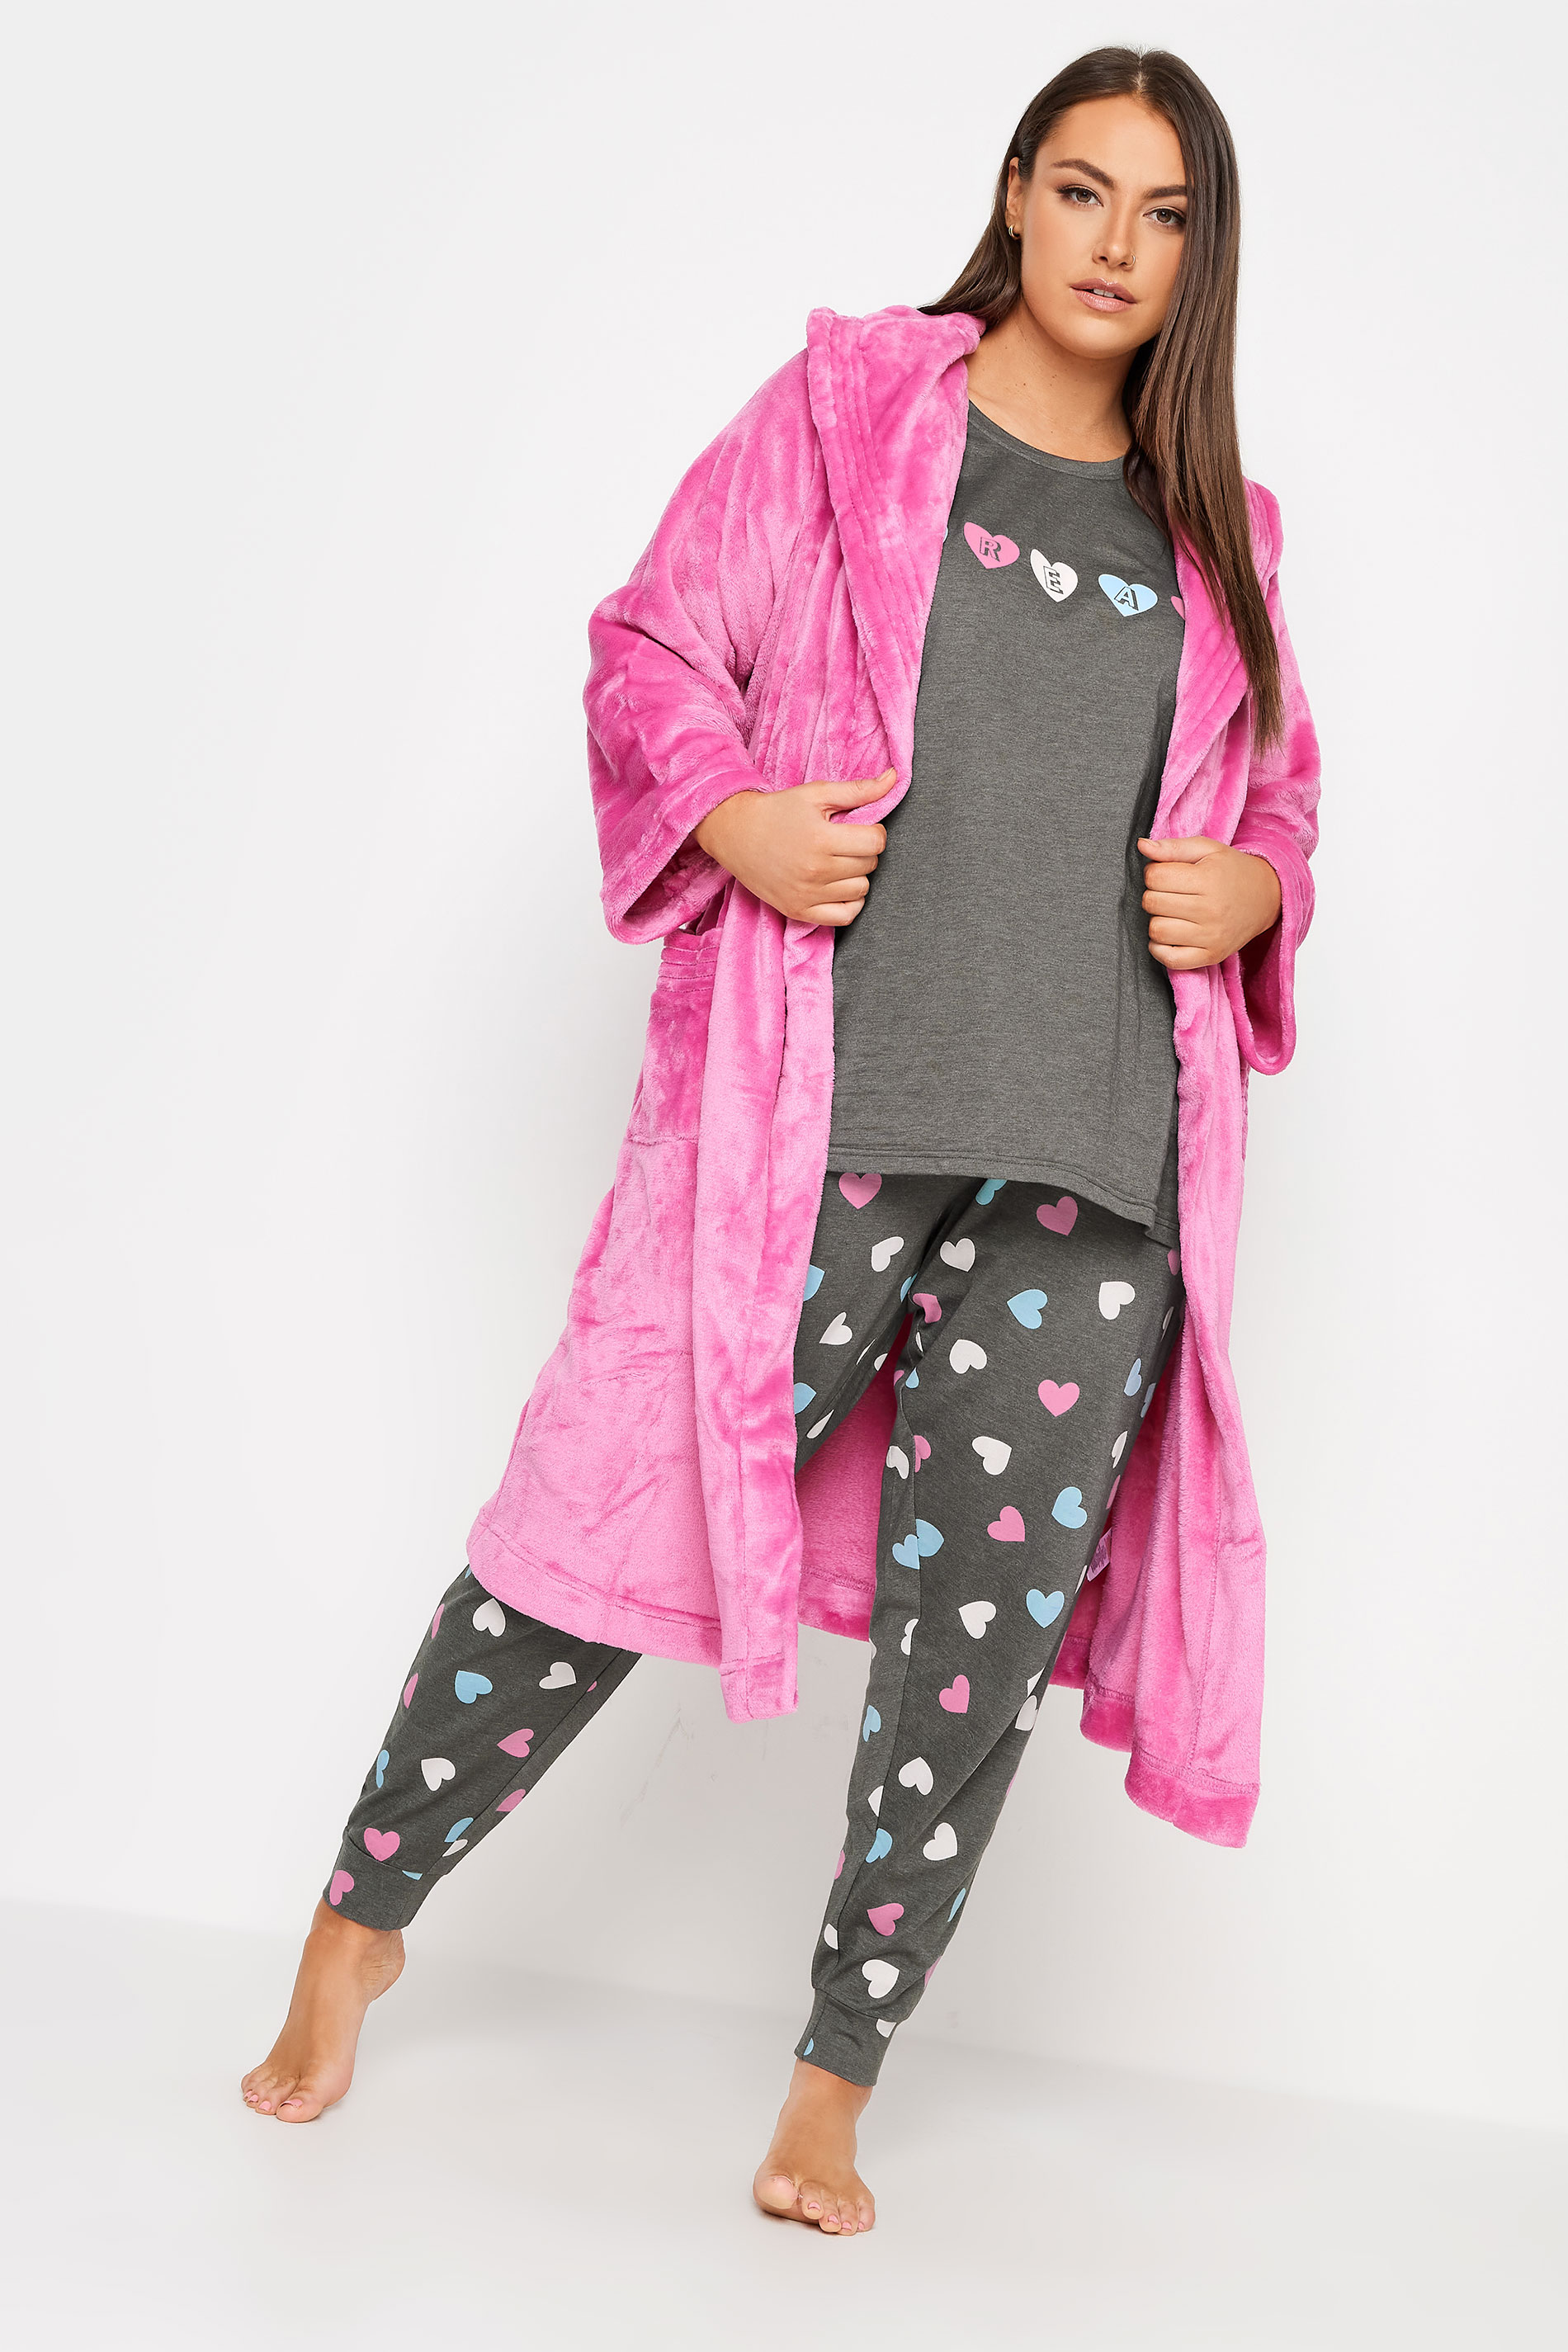 YOURS Plus Size Grey 'Dream' Slogan Heart Print Pyjama Set | Yours Clothing 3